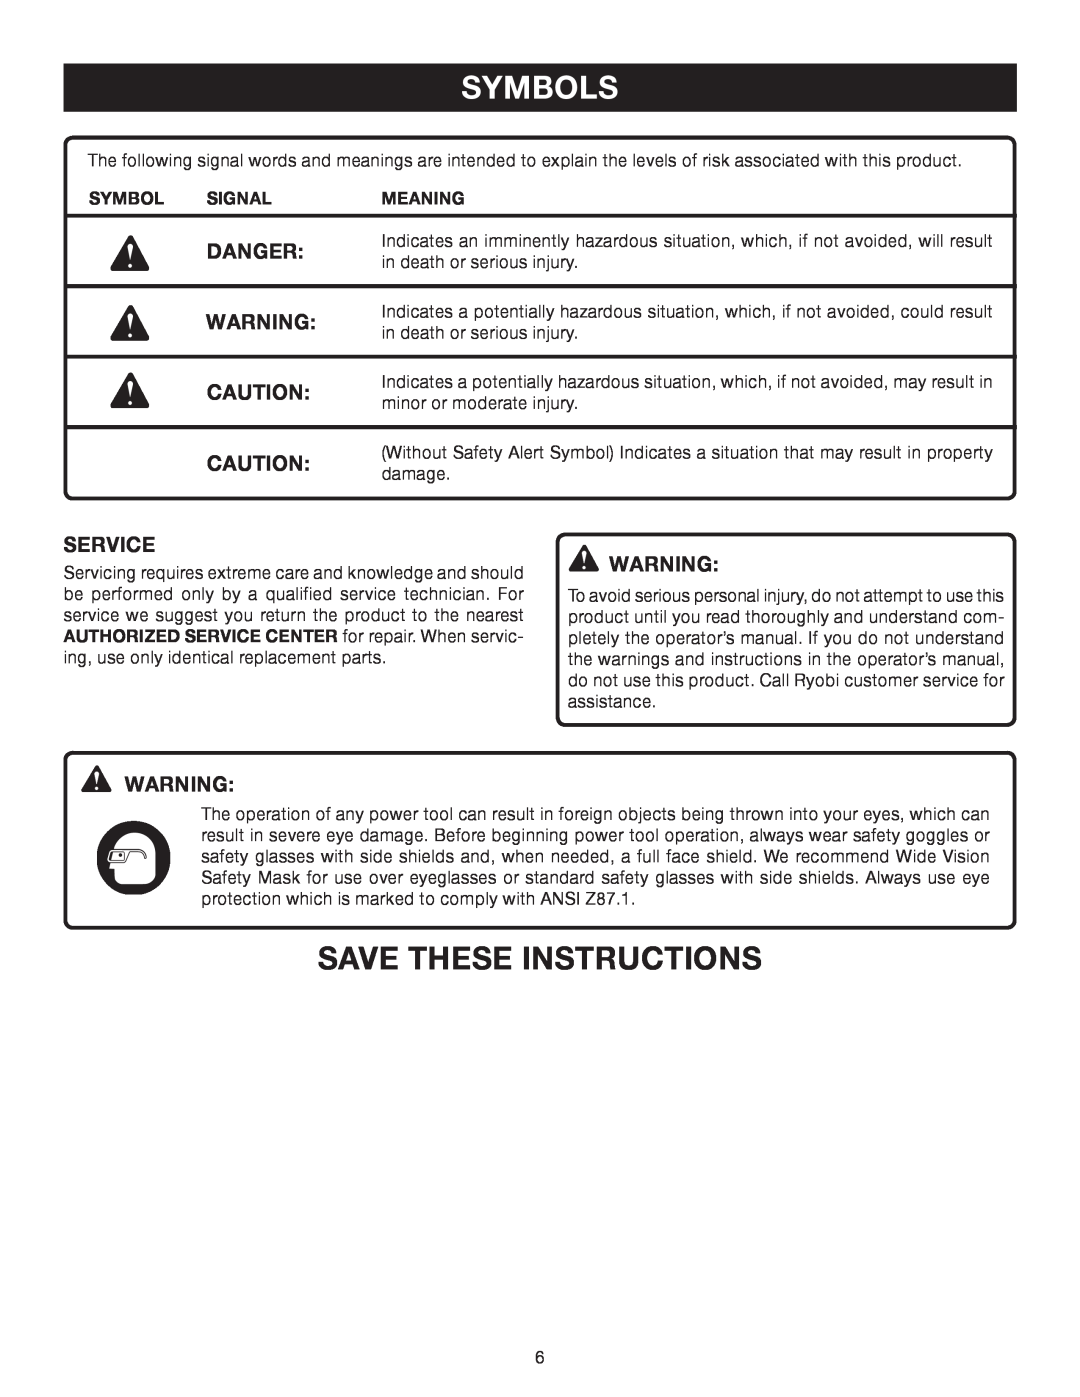 Ryobi A25RT02 manual Save These Instructions, Danger, Service, Symbols 